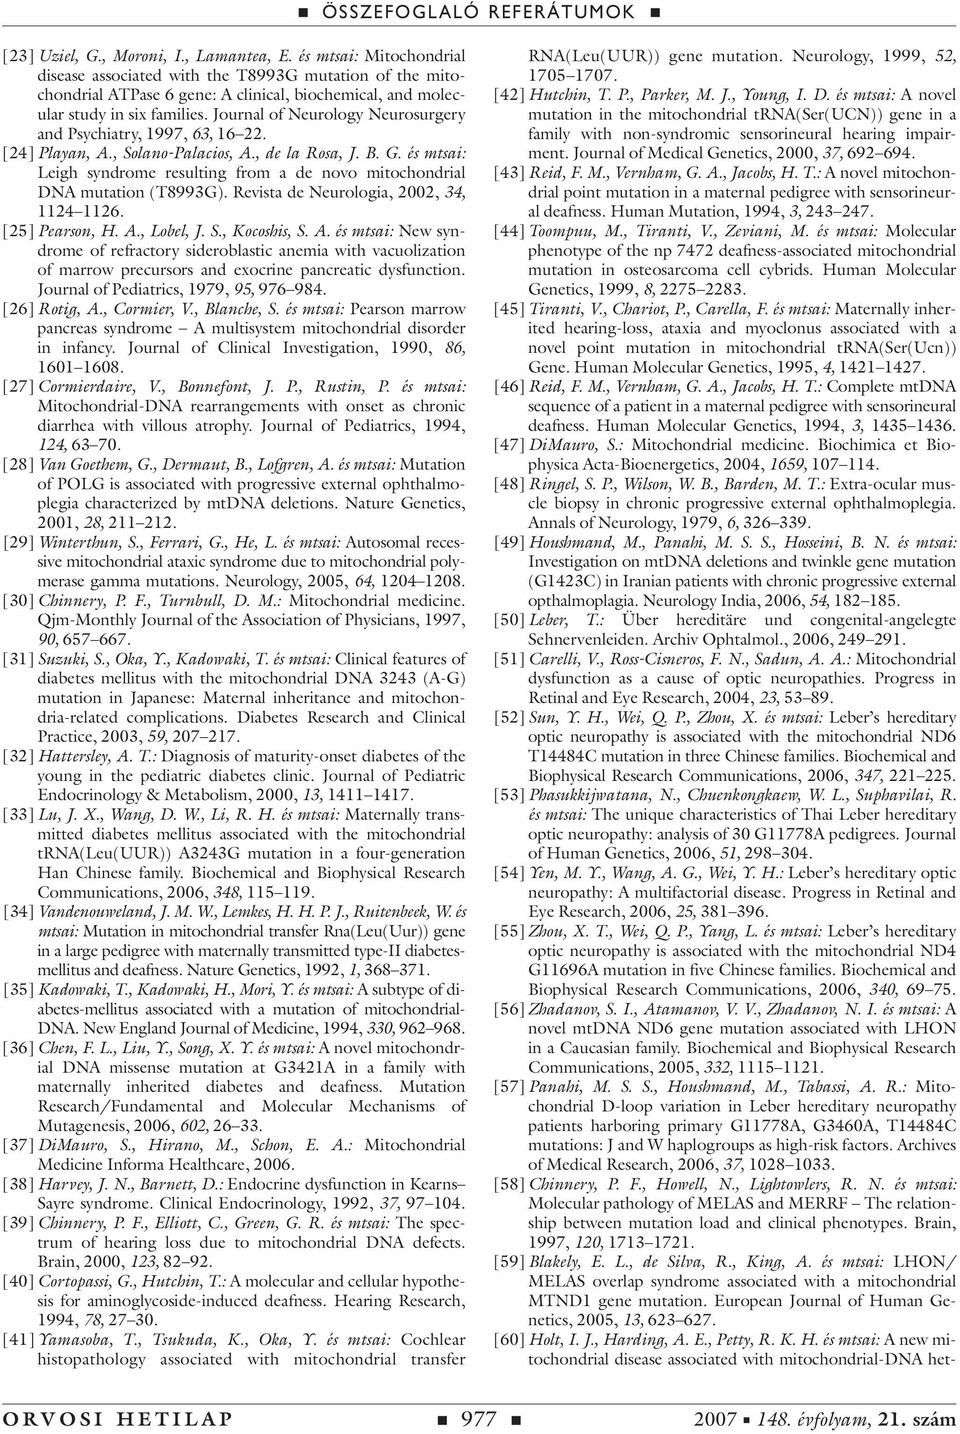 Journal of Neurology Neurosurgery and Psychiatry, 1997, 63, 16 22. [24] Playan, A., Solano-Palacios, A., de la Rosa, J. B. G.